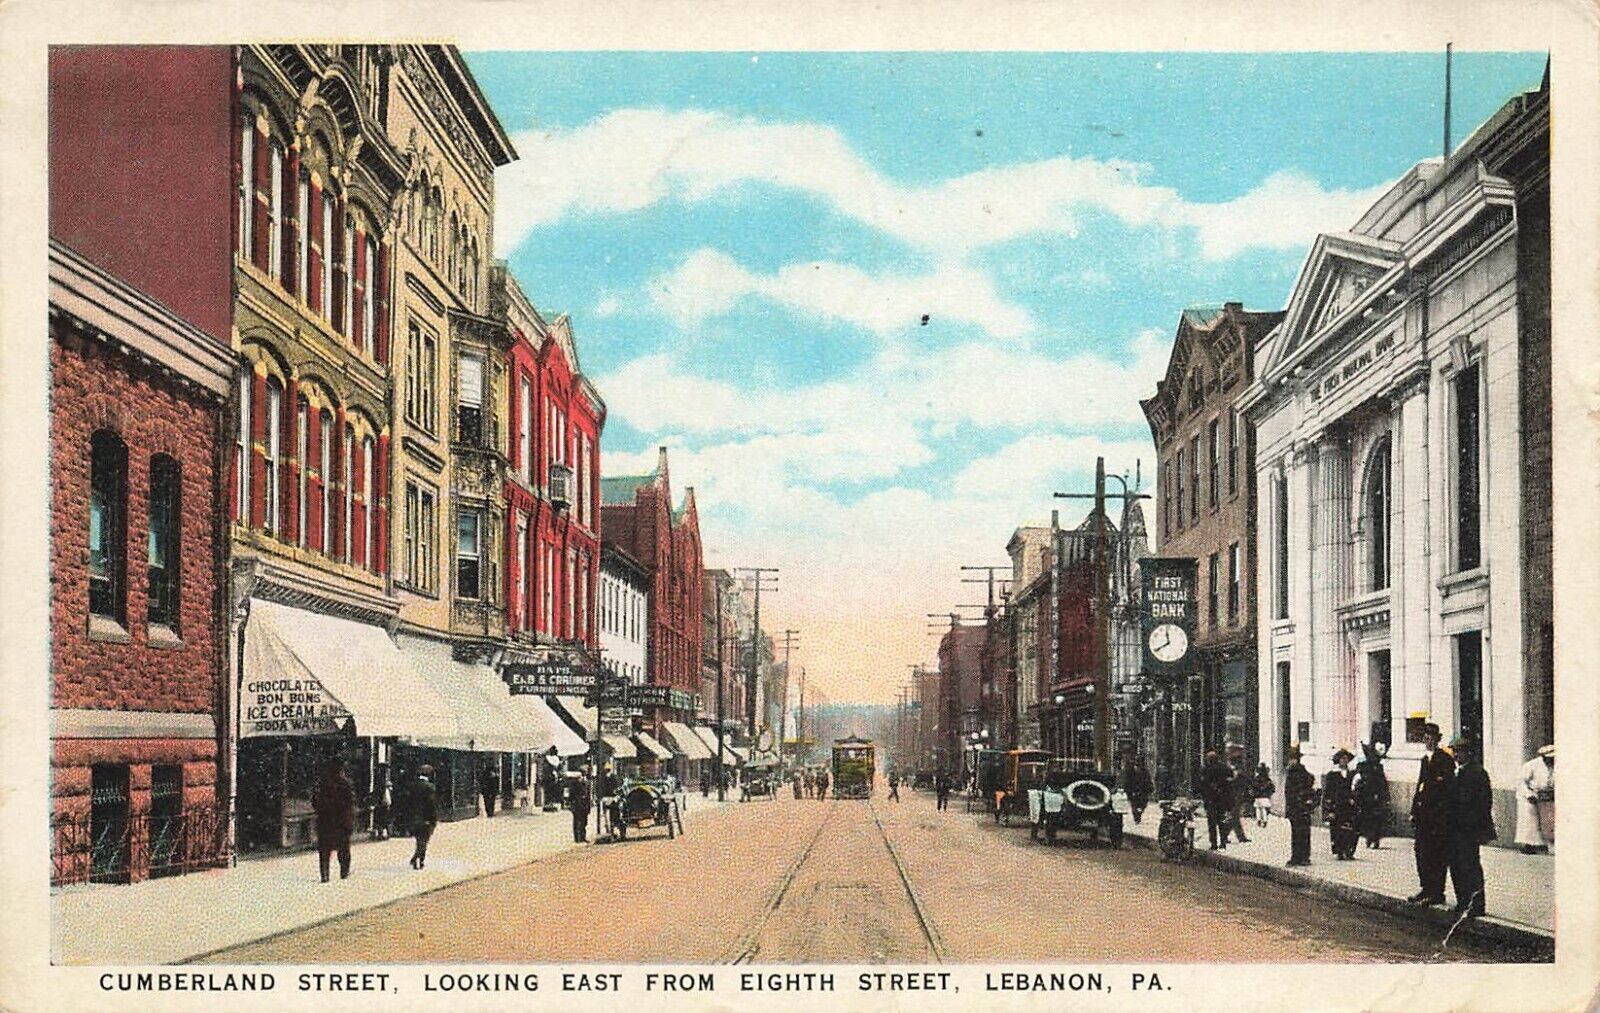 1924 PENNSYLVANIA POSTCARD: CUMBERLAND STREET, FROM 8TH STREET, LEBANON, PA